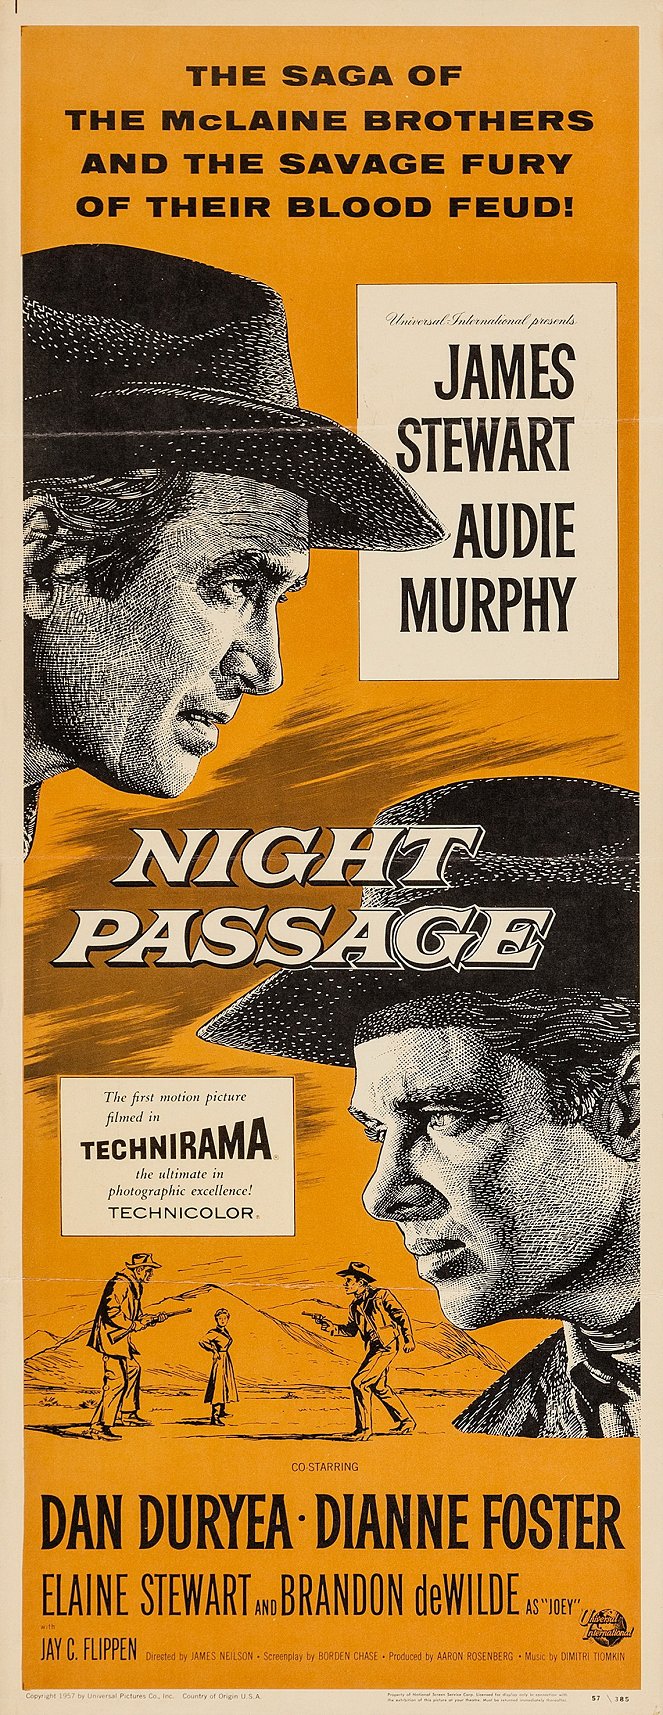 Night Passage - Posters